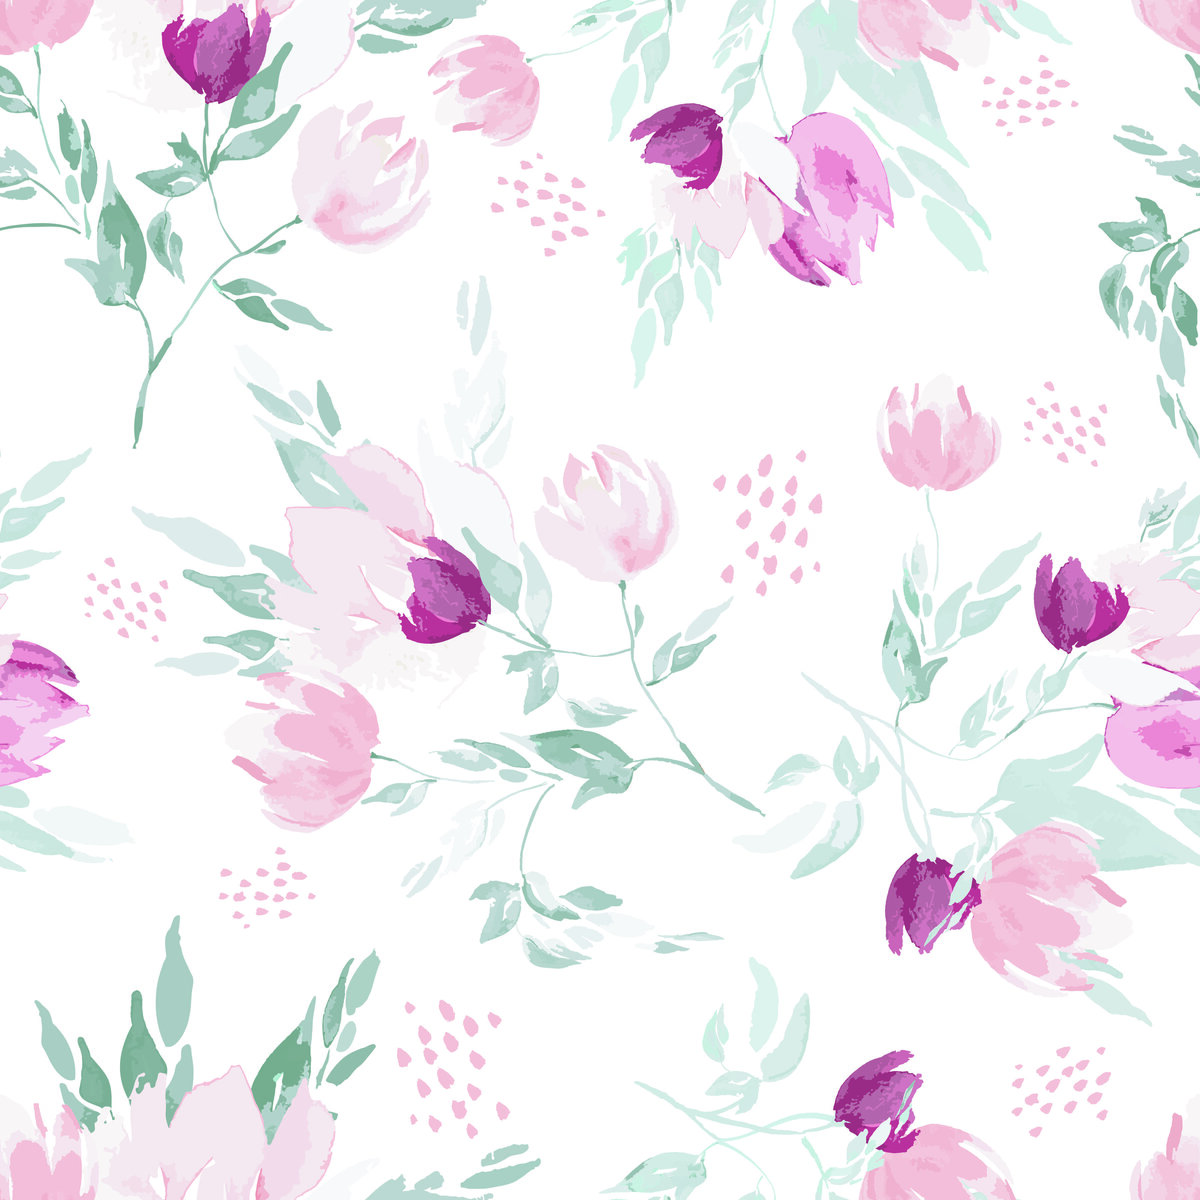 Garden Blooms (white) by Deer Fiorella Design - Dusty Moon Fabric-01